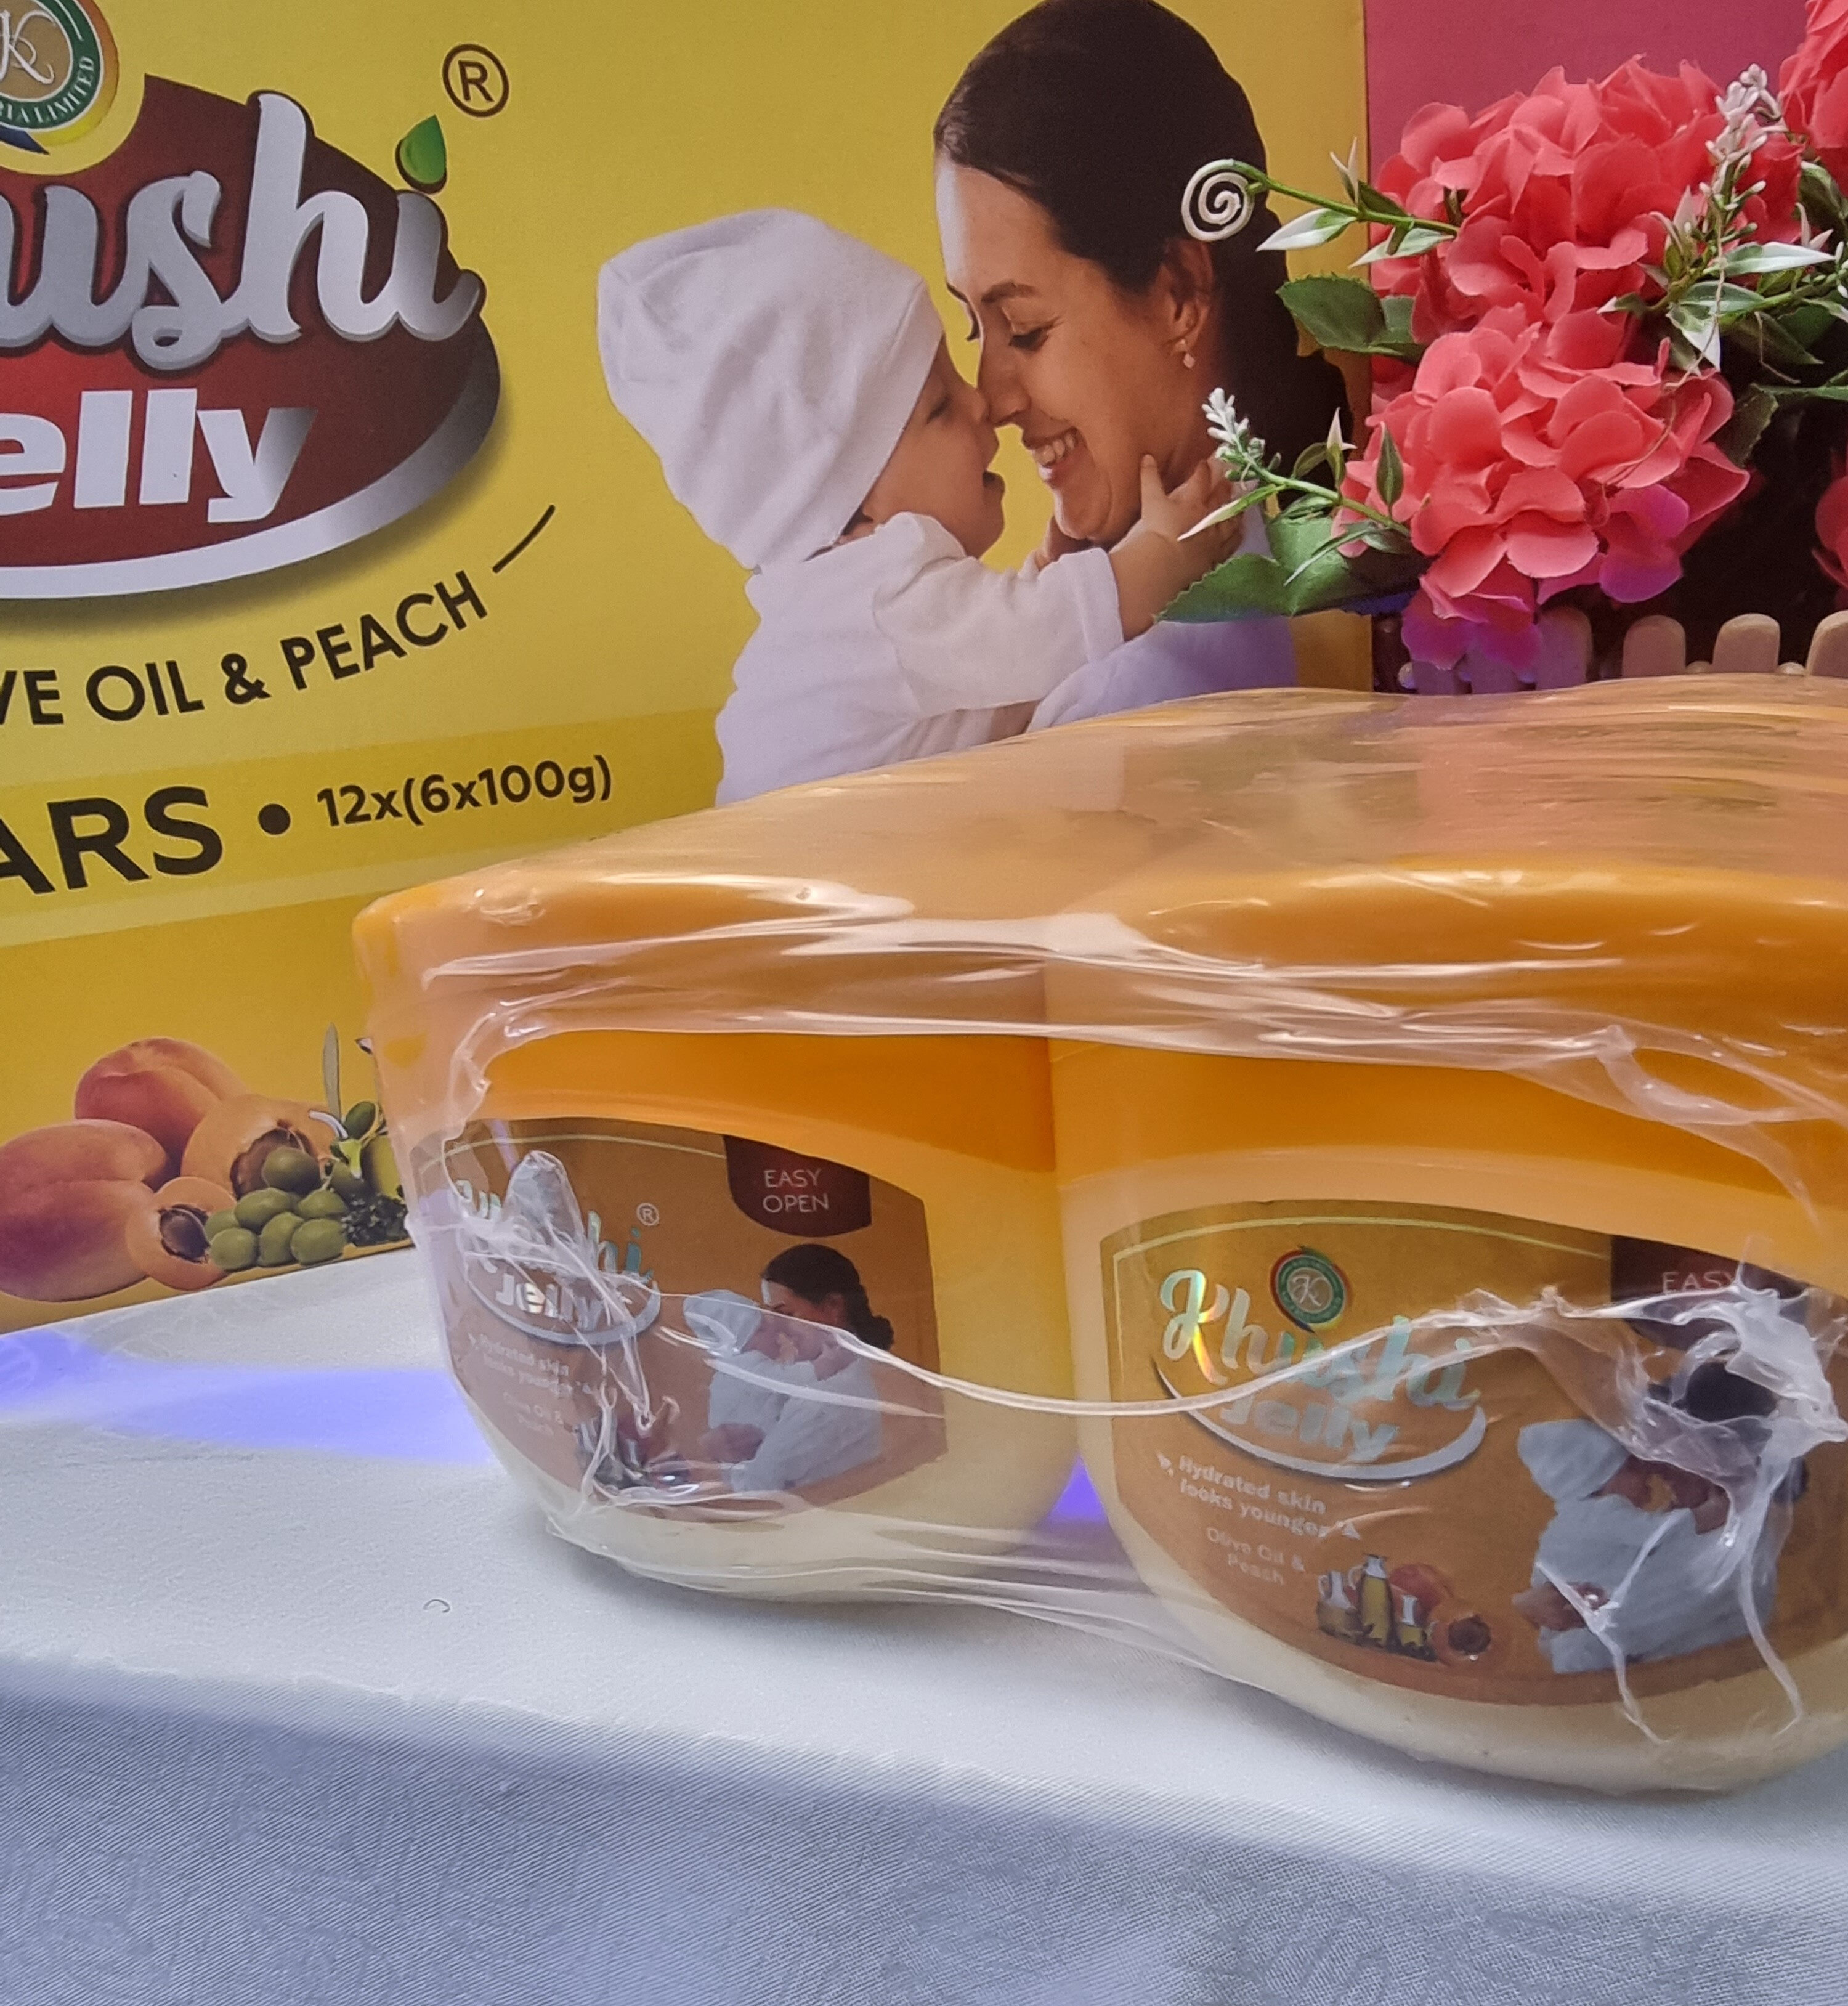 khushi Jelly - Produkt - en